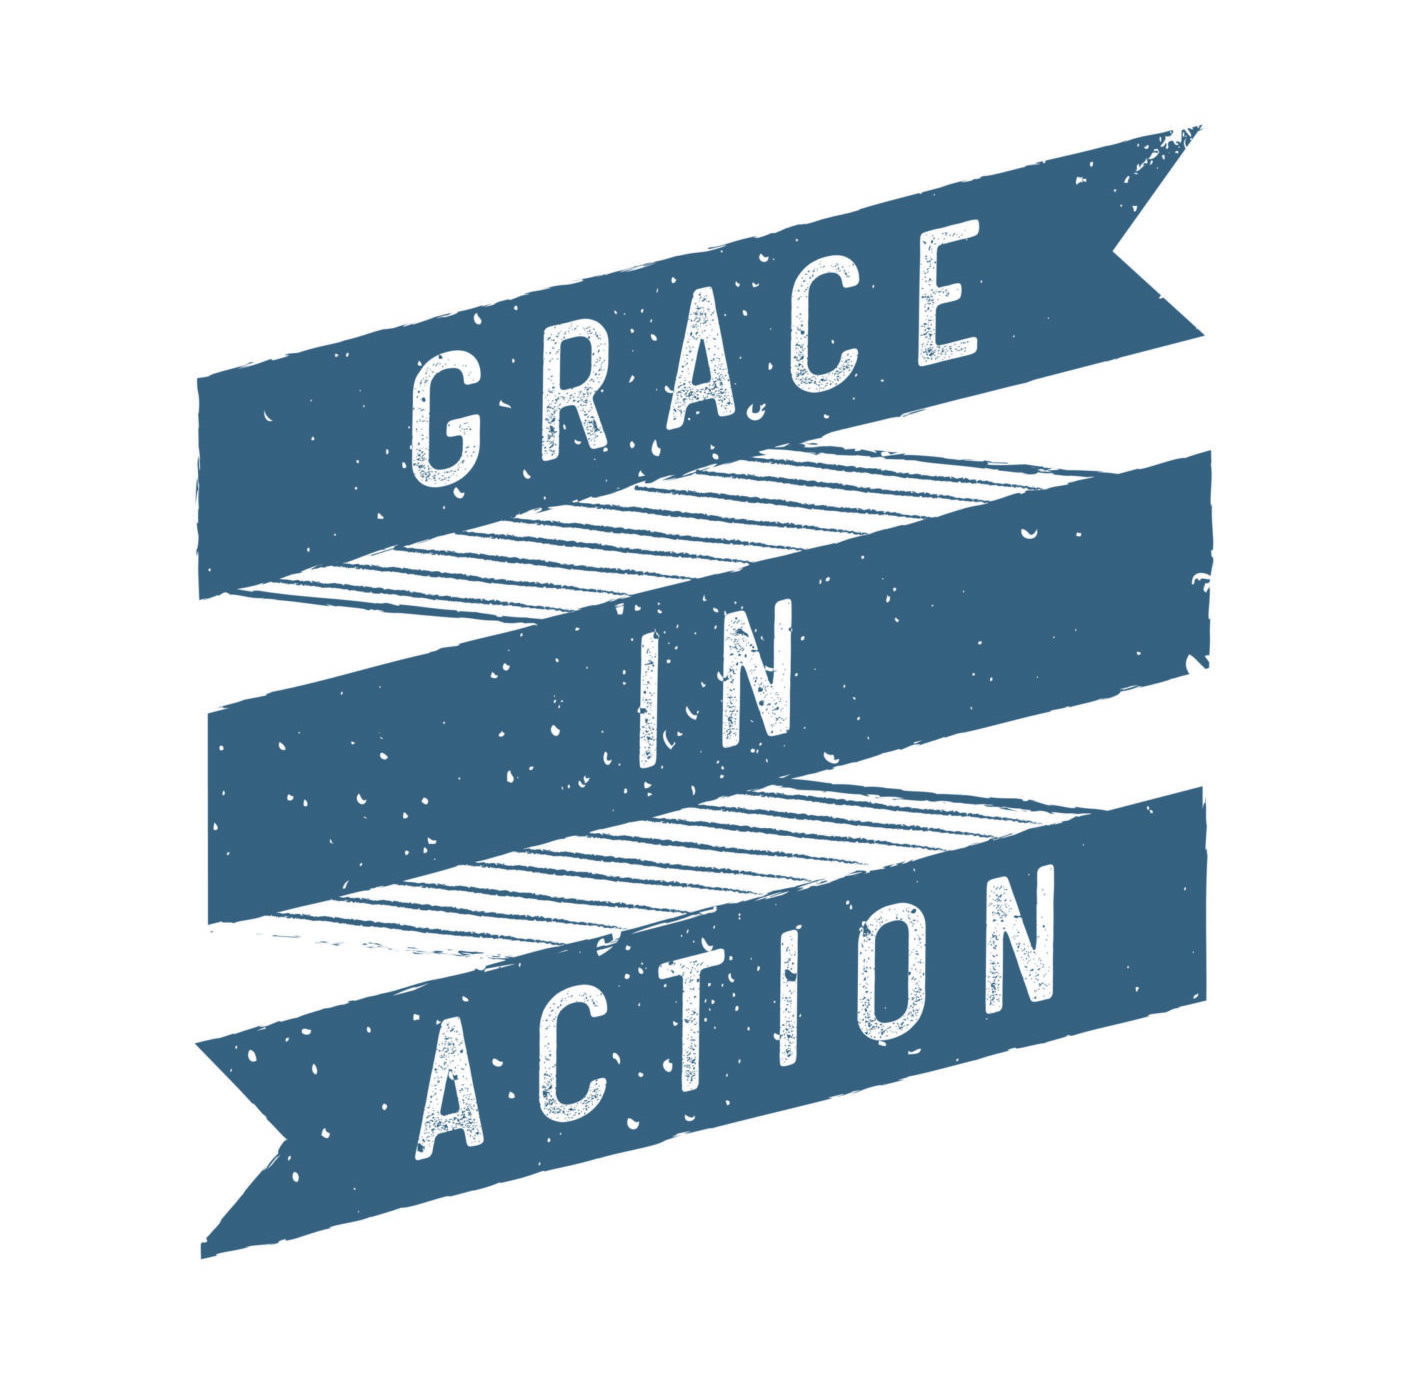 Giving Grace